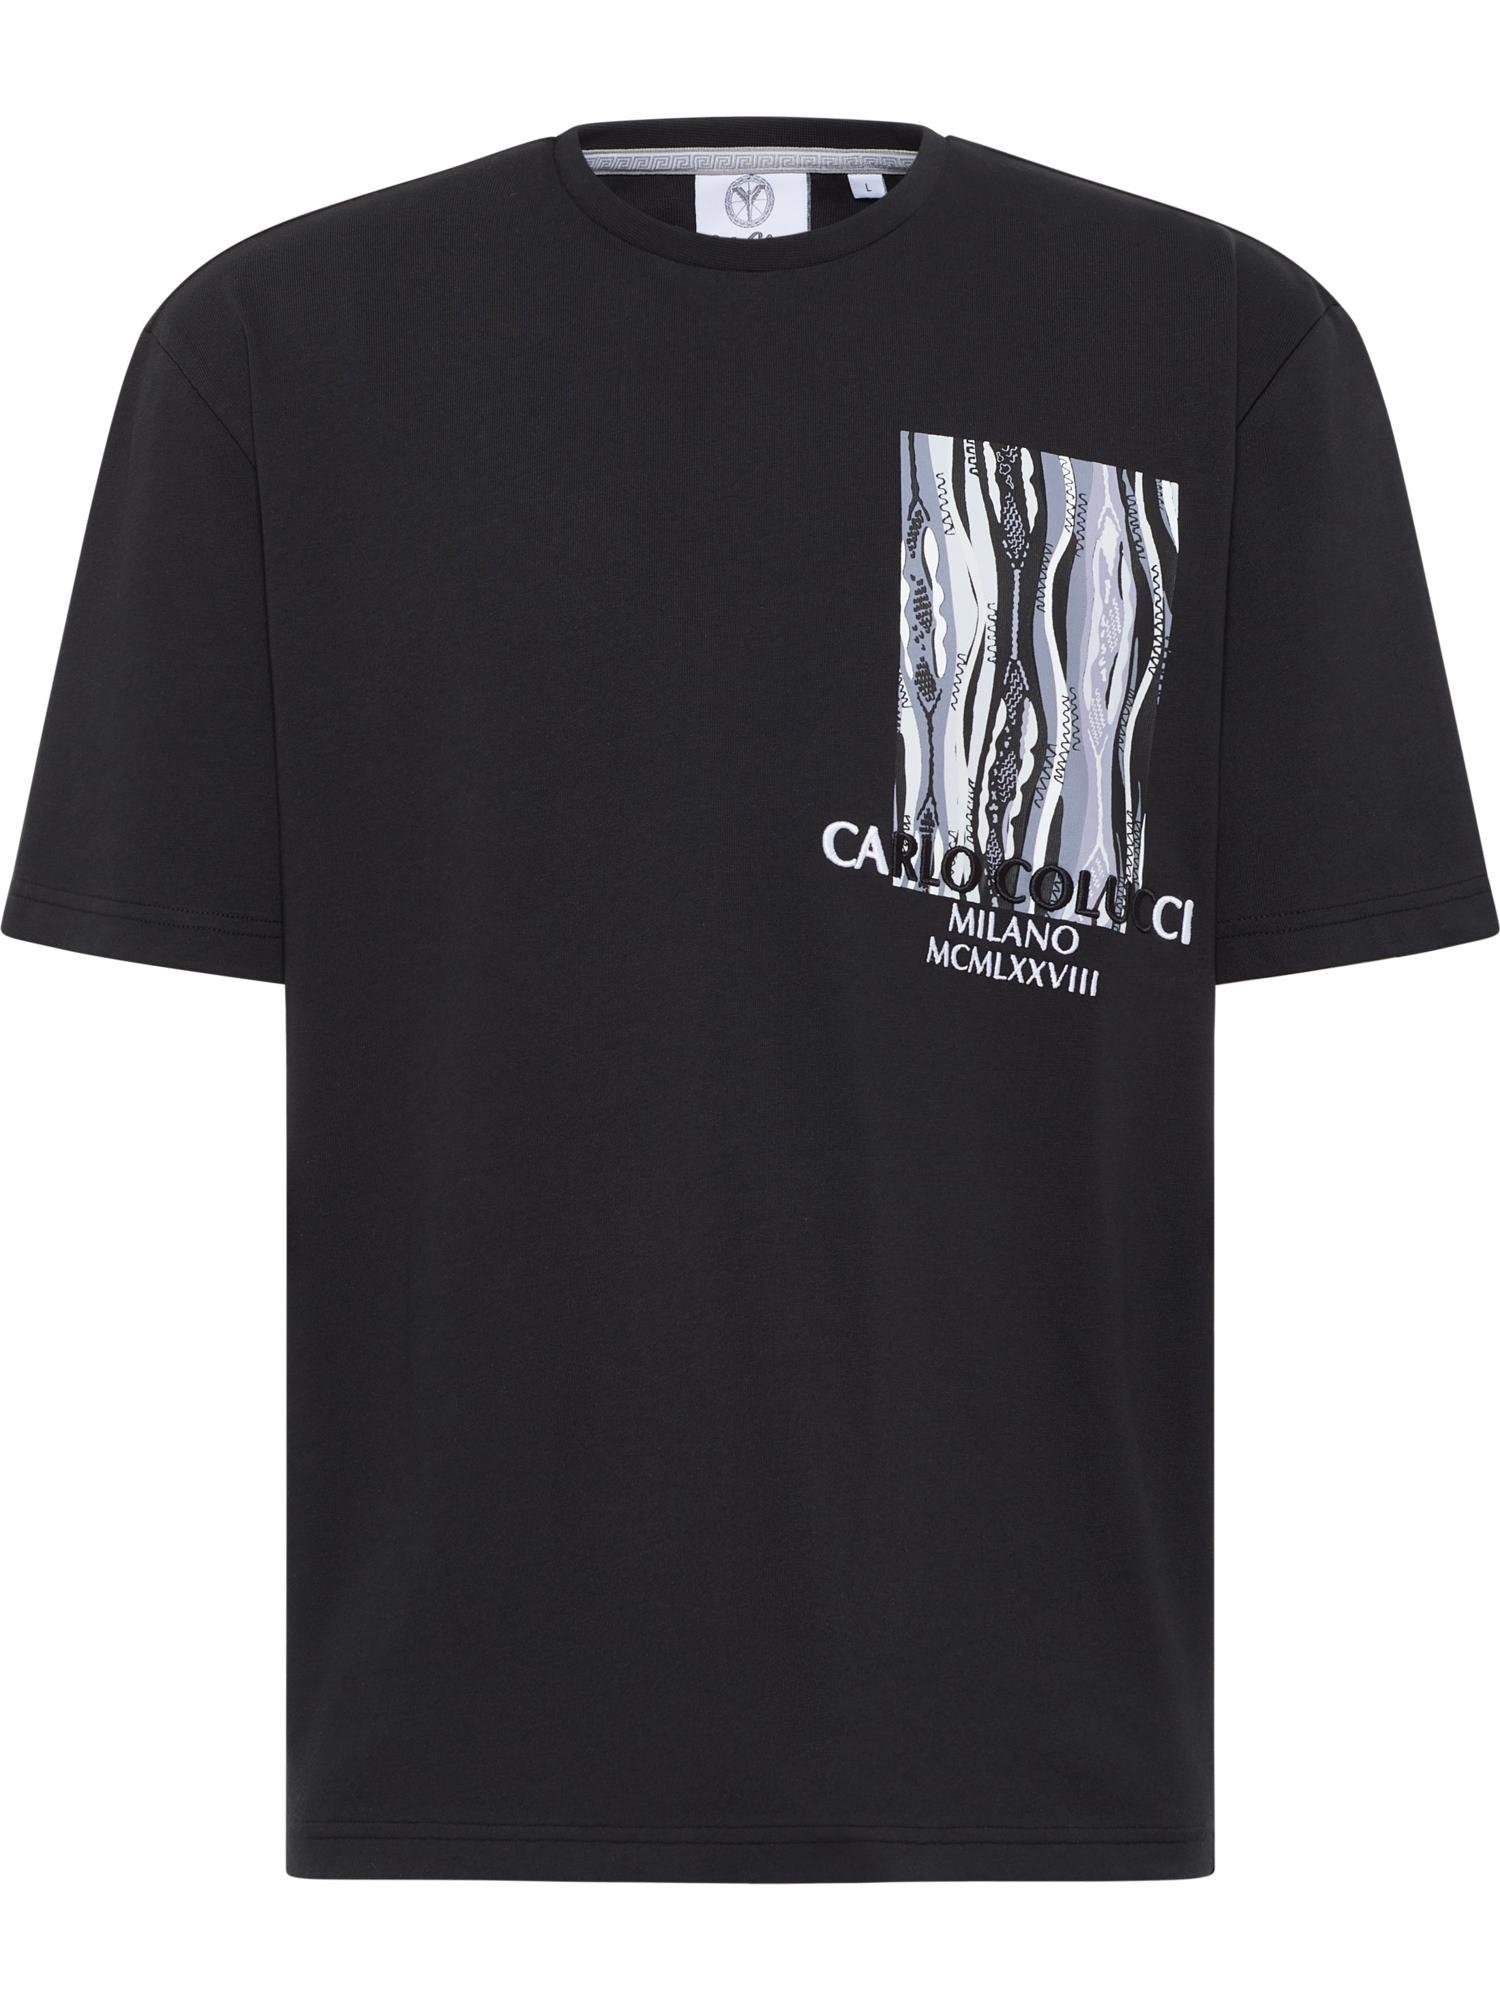 CARLO COLUCCI T-Shirt Pandis Schwarz De